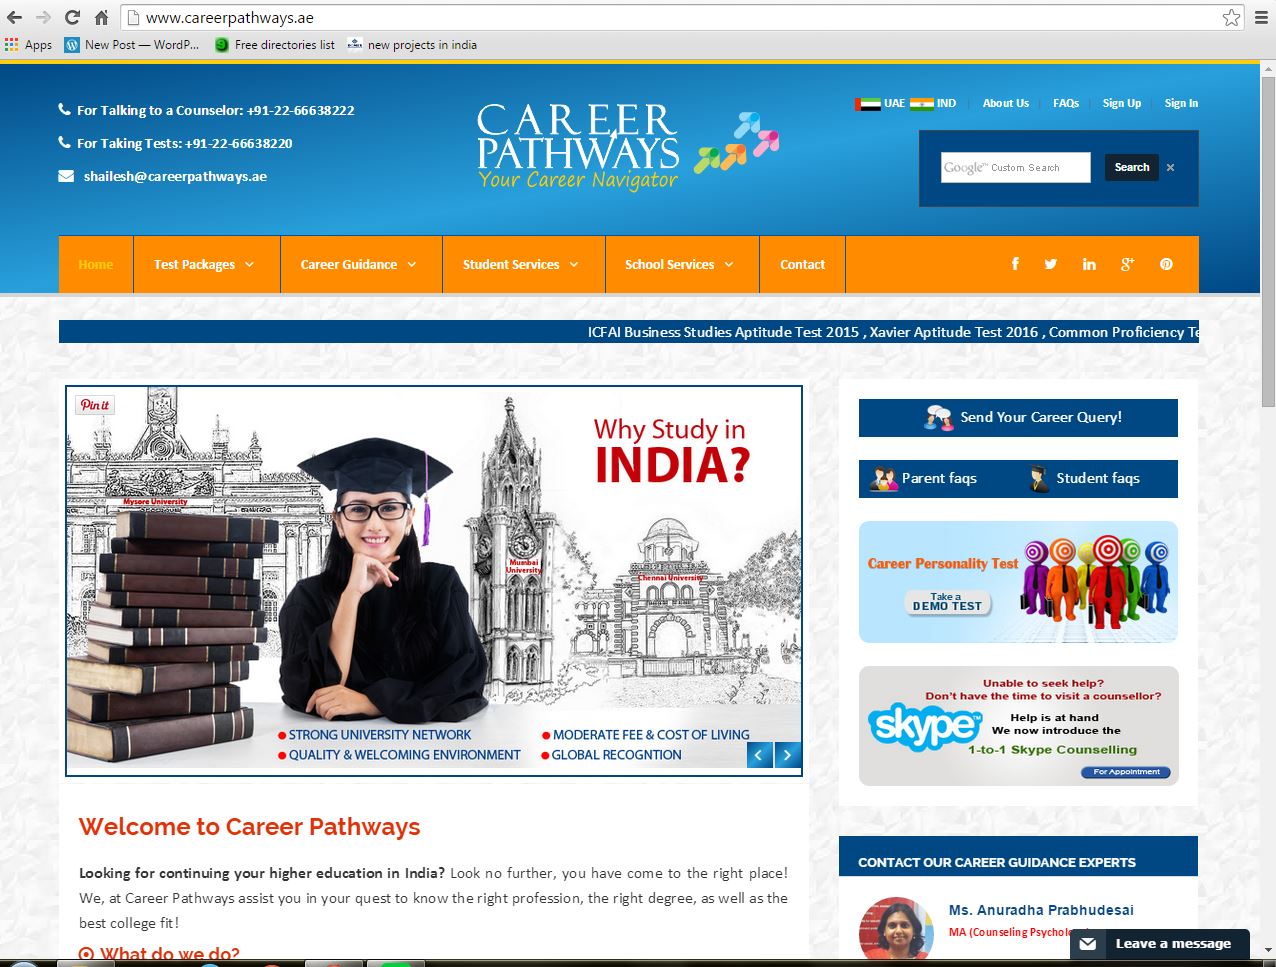 career-pathways-online-aptitude-test-dubai-dubai-british-school-jumeirah-park-dbsjp